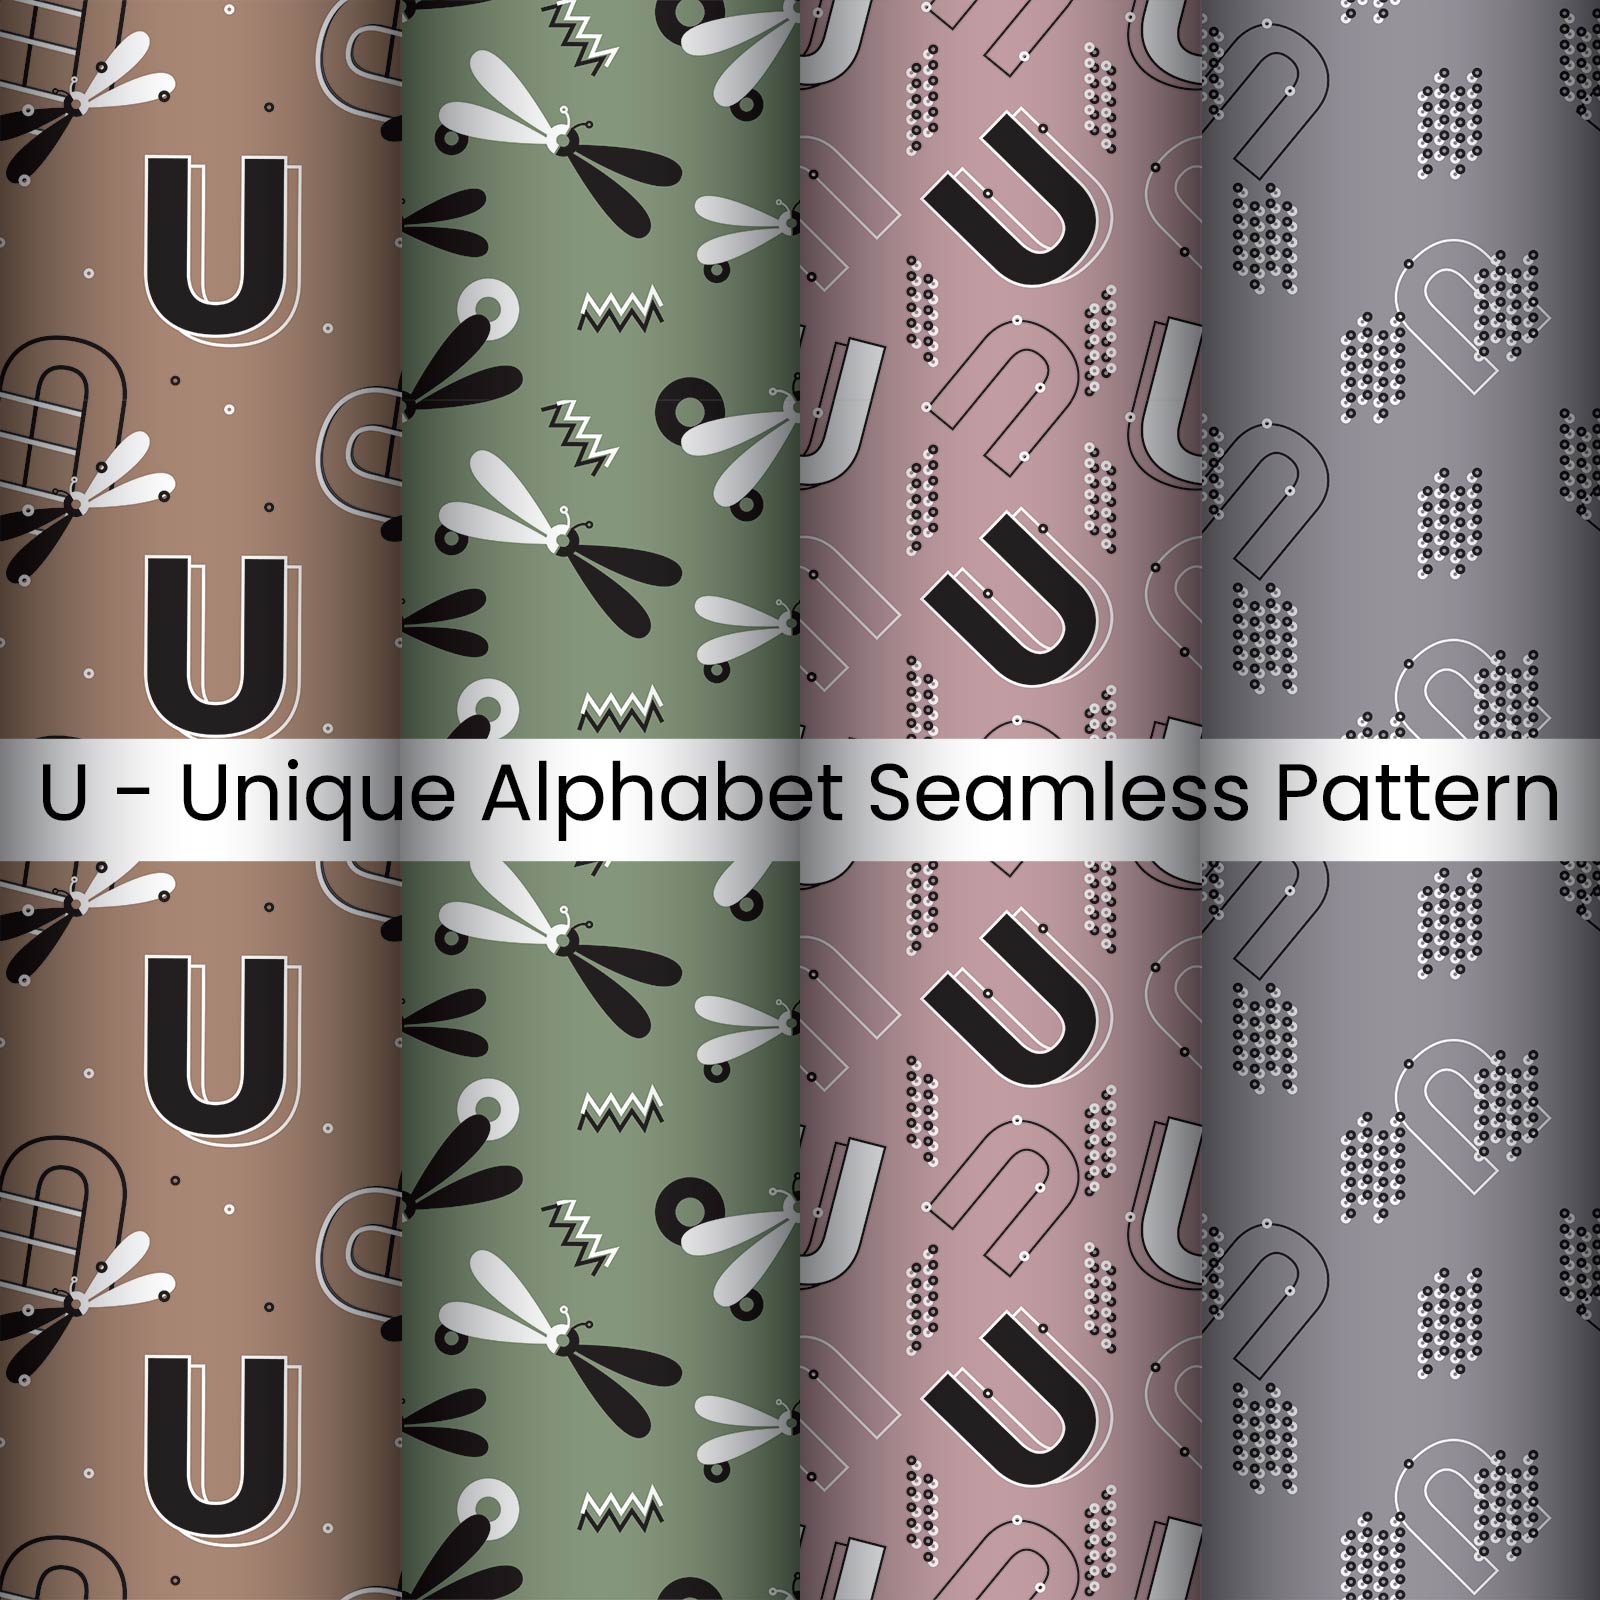 U-Unique Alphabet Seamless Pattern Designs cover image.